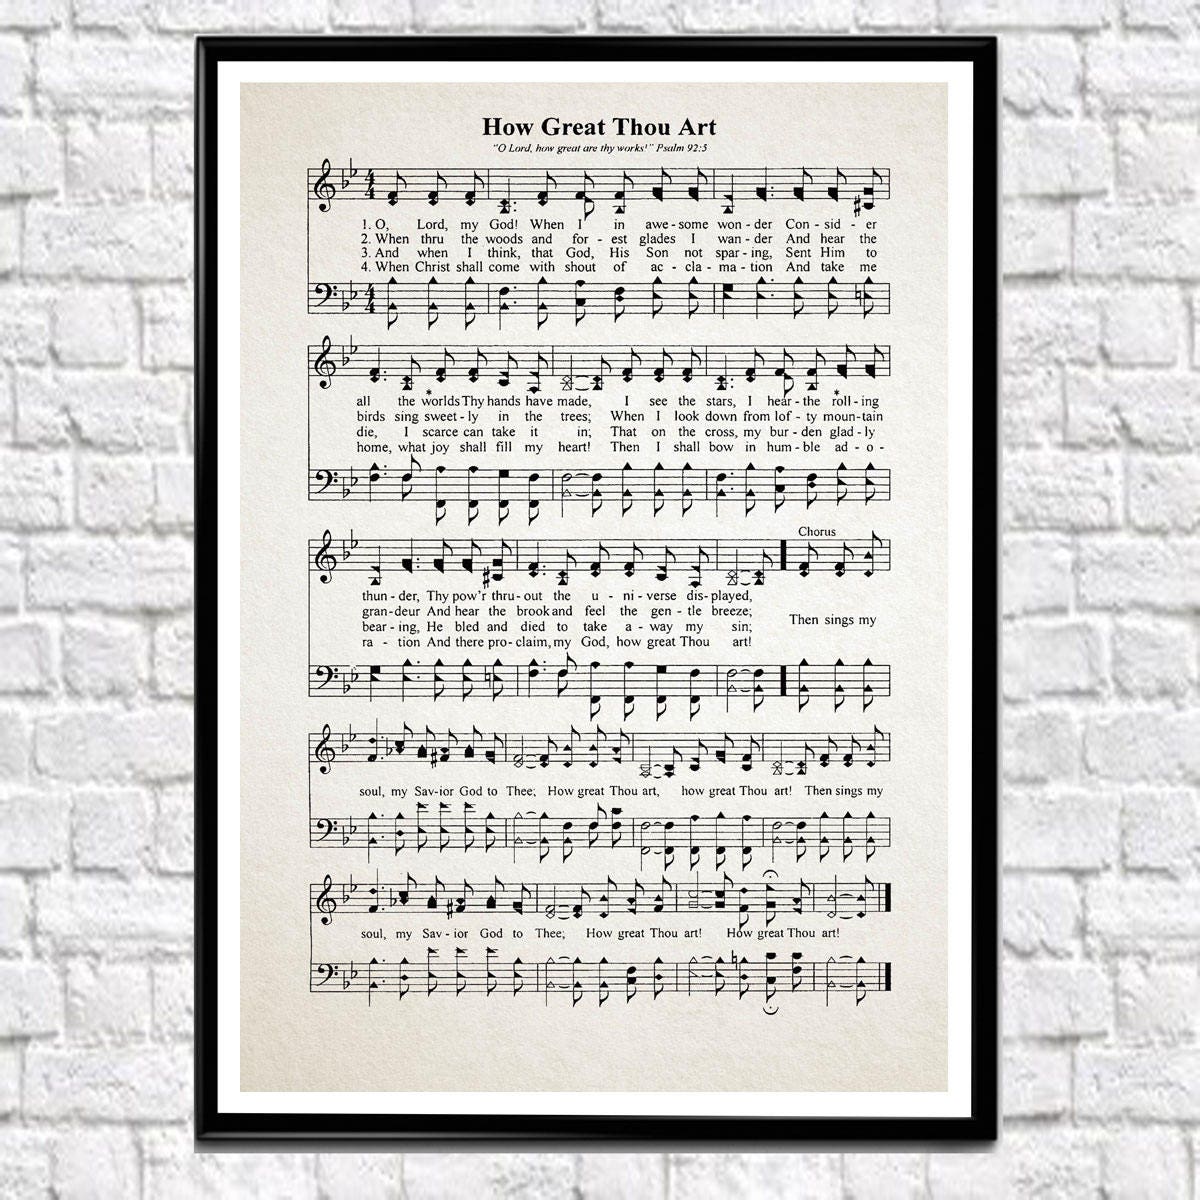 How Great Thou Art Music Sheet Poster Music Sheet Print Music Sheet Print Song Sheet Lyrics Poster Lyrics Wall Art Music Poster Music Print